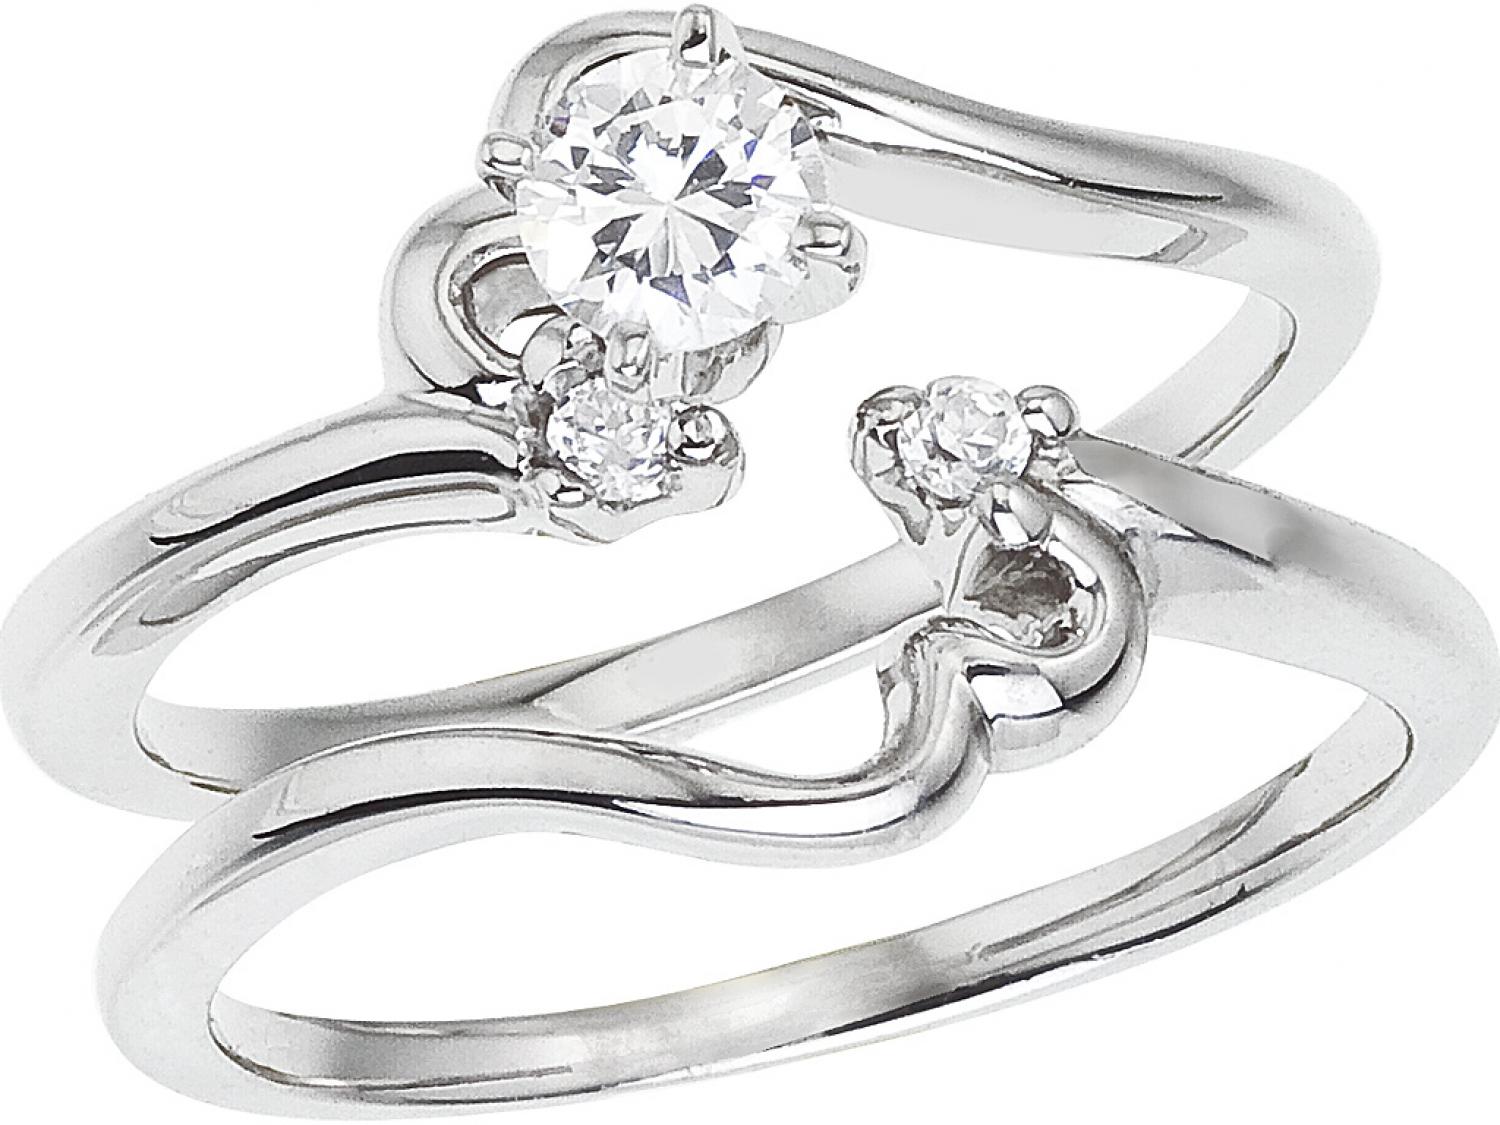 14K White Gold Qpid Heart .24 Ct Diamond Bridal Ring Set